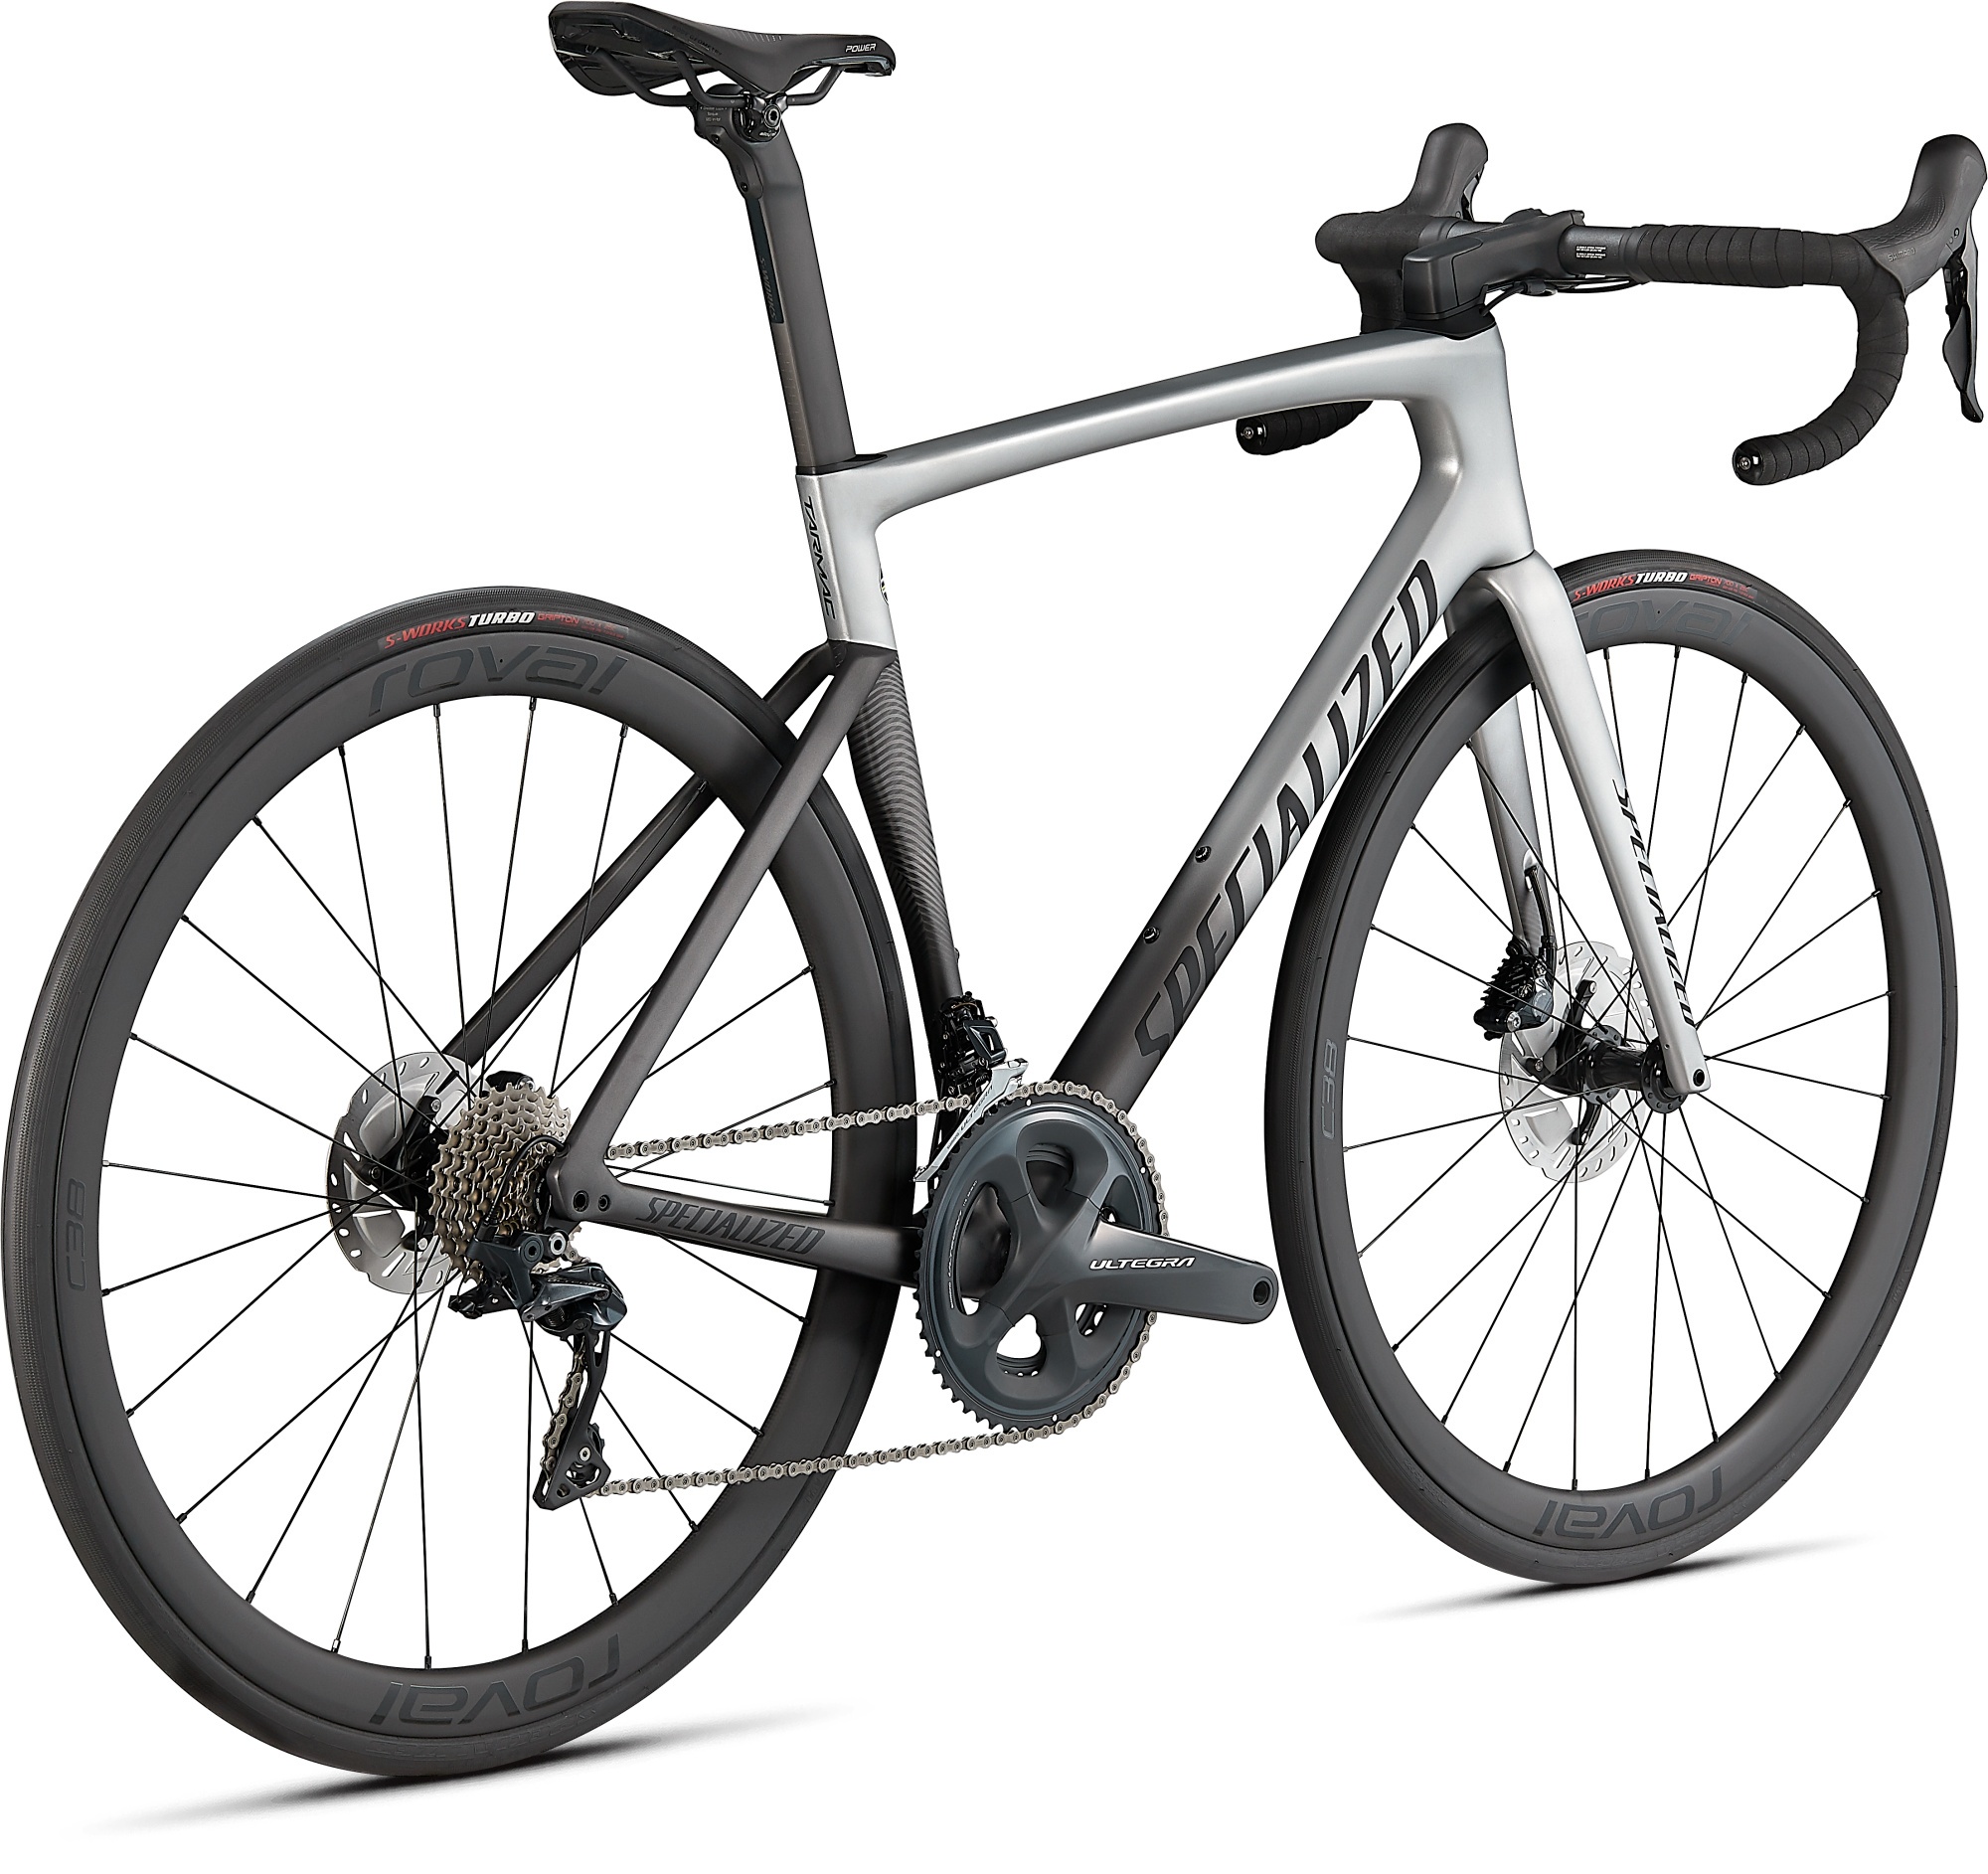 Cykler - Racercykler - Specialized Tarmac Expert 2021 - Sølv